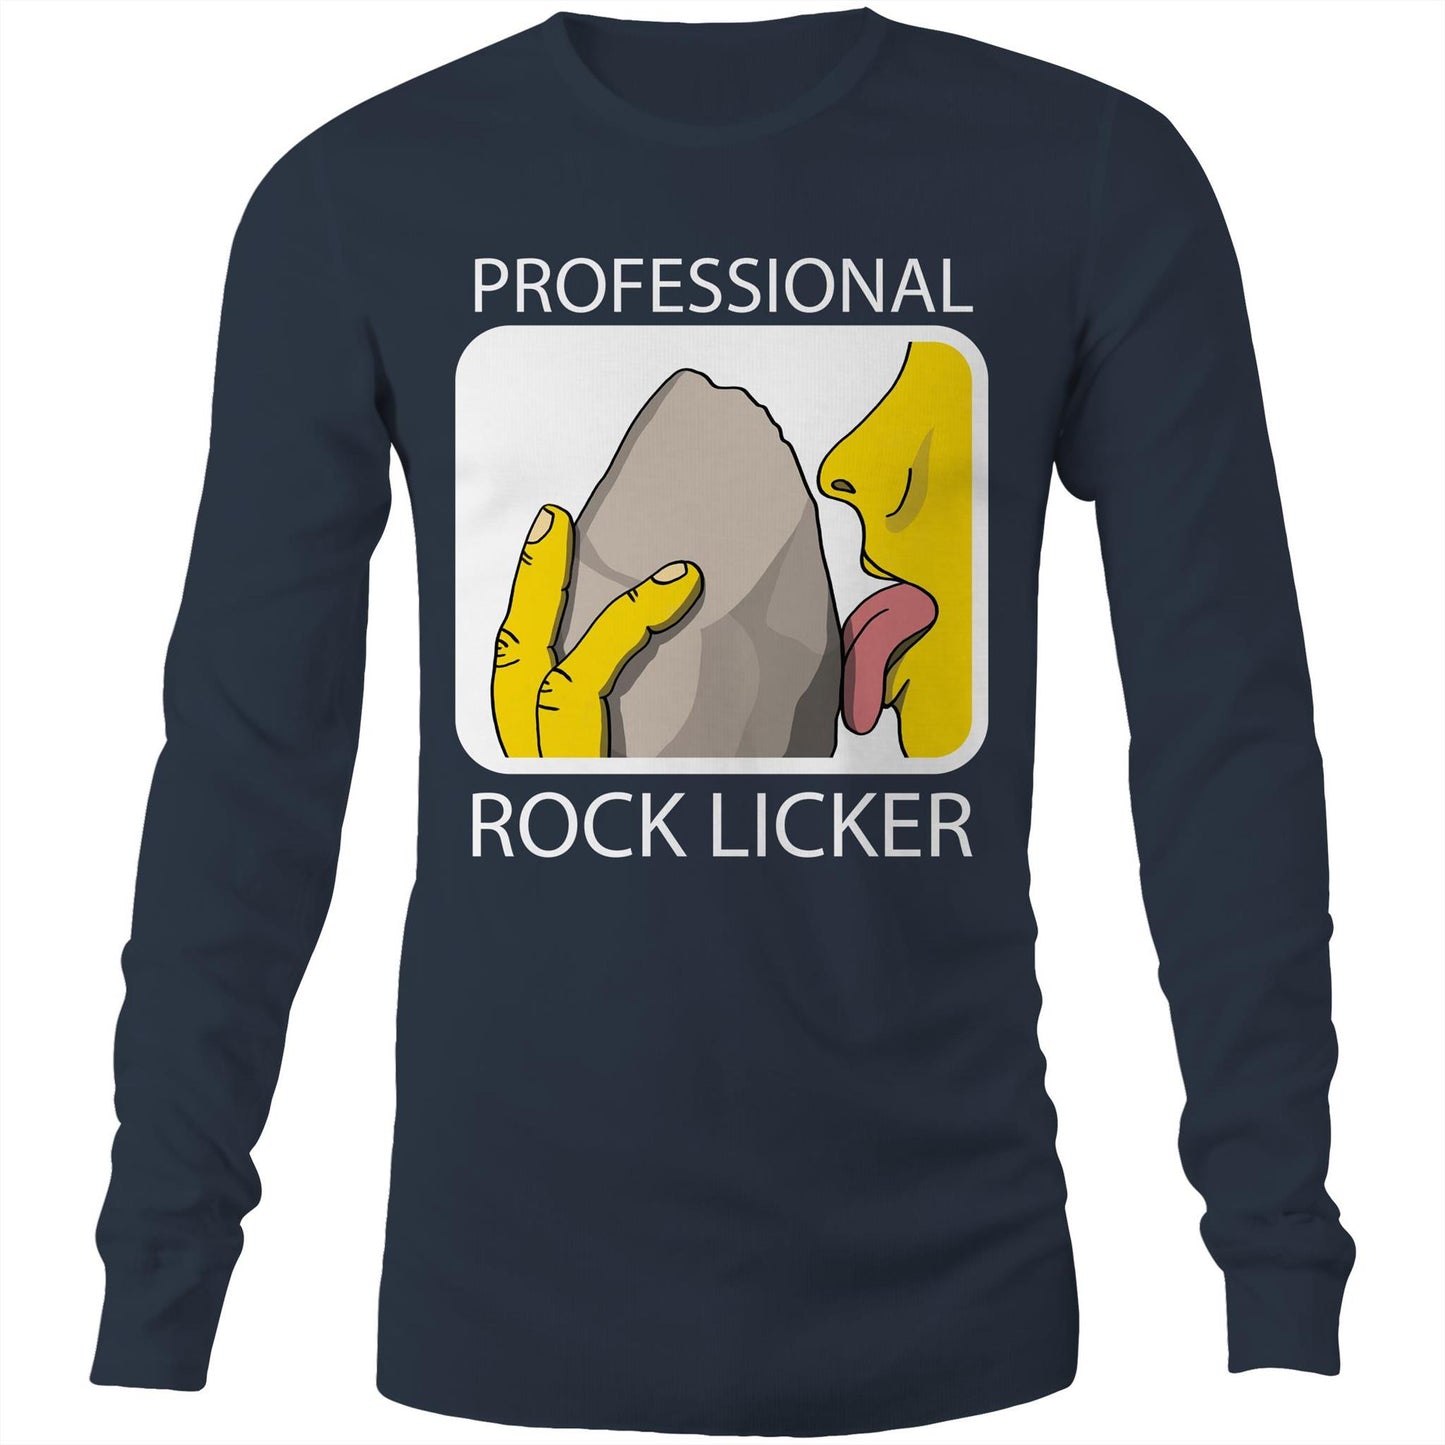 Professional Rock Licker (AS Colour Base - Mens Long Sleeve T-Shirt)